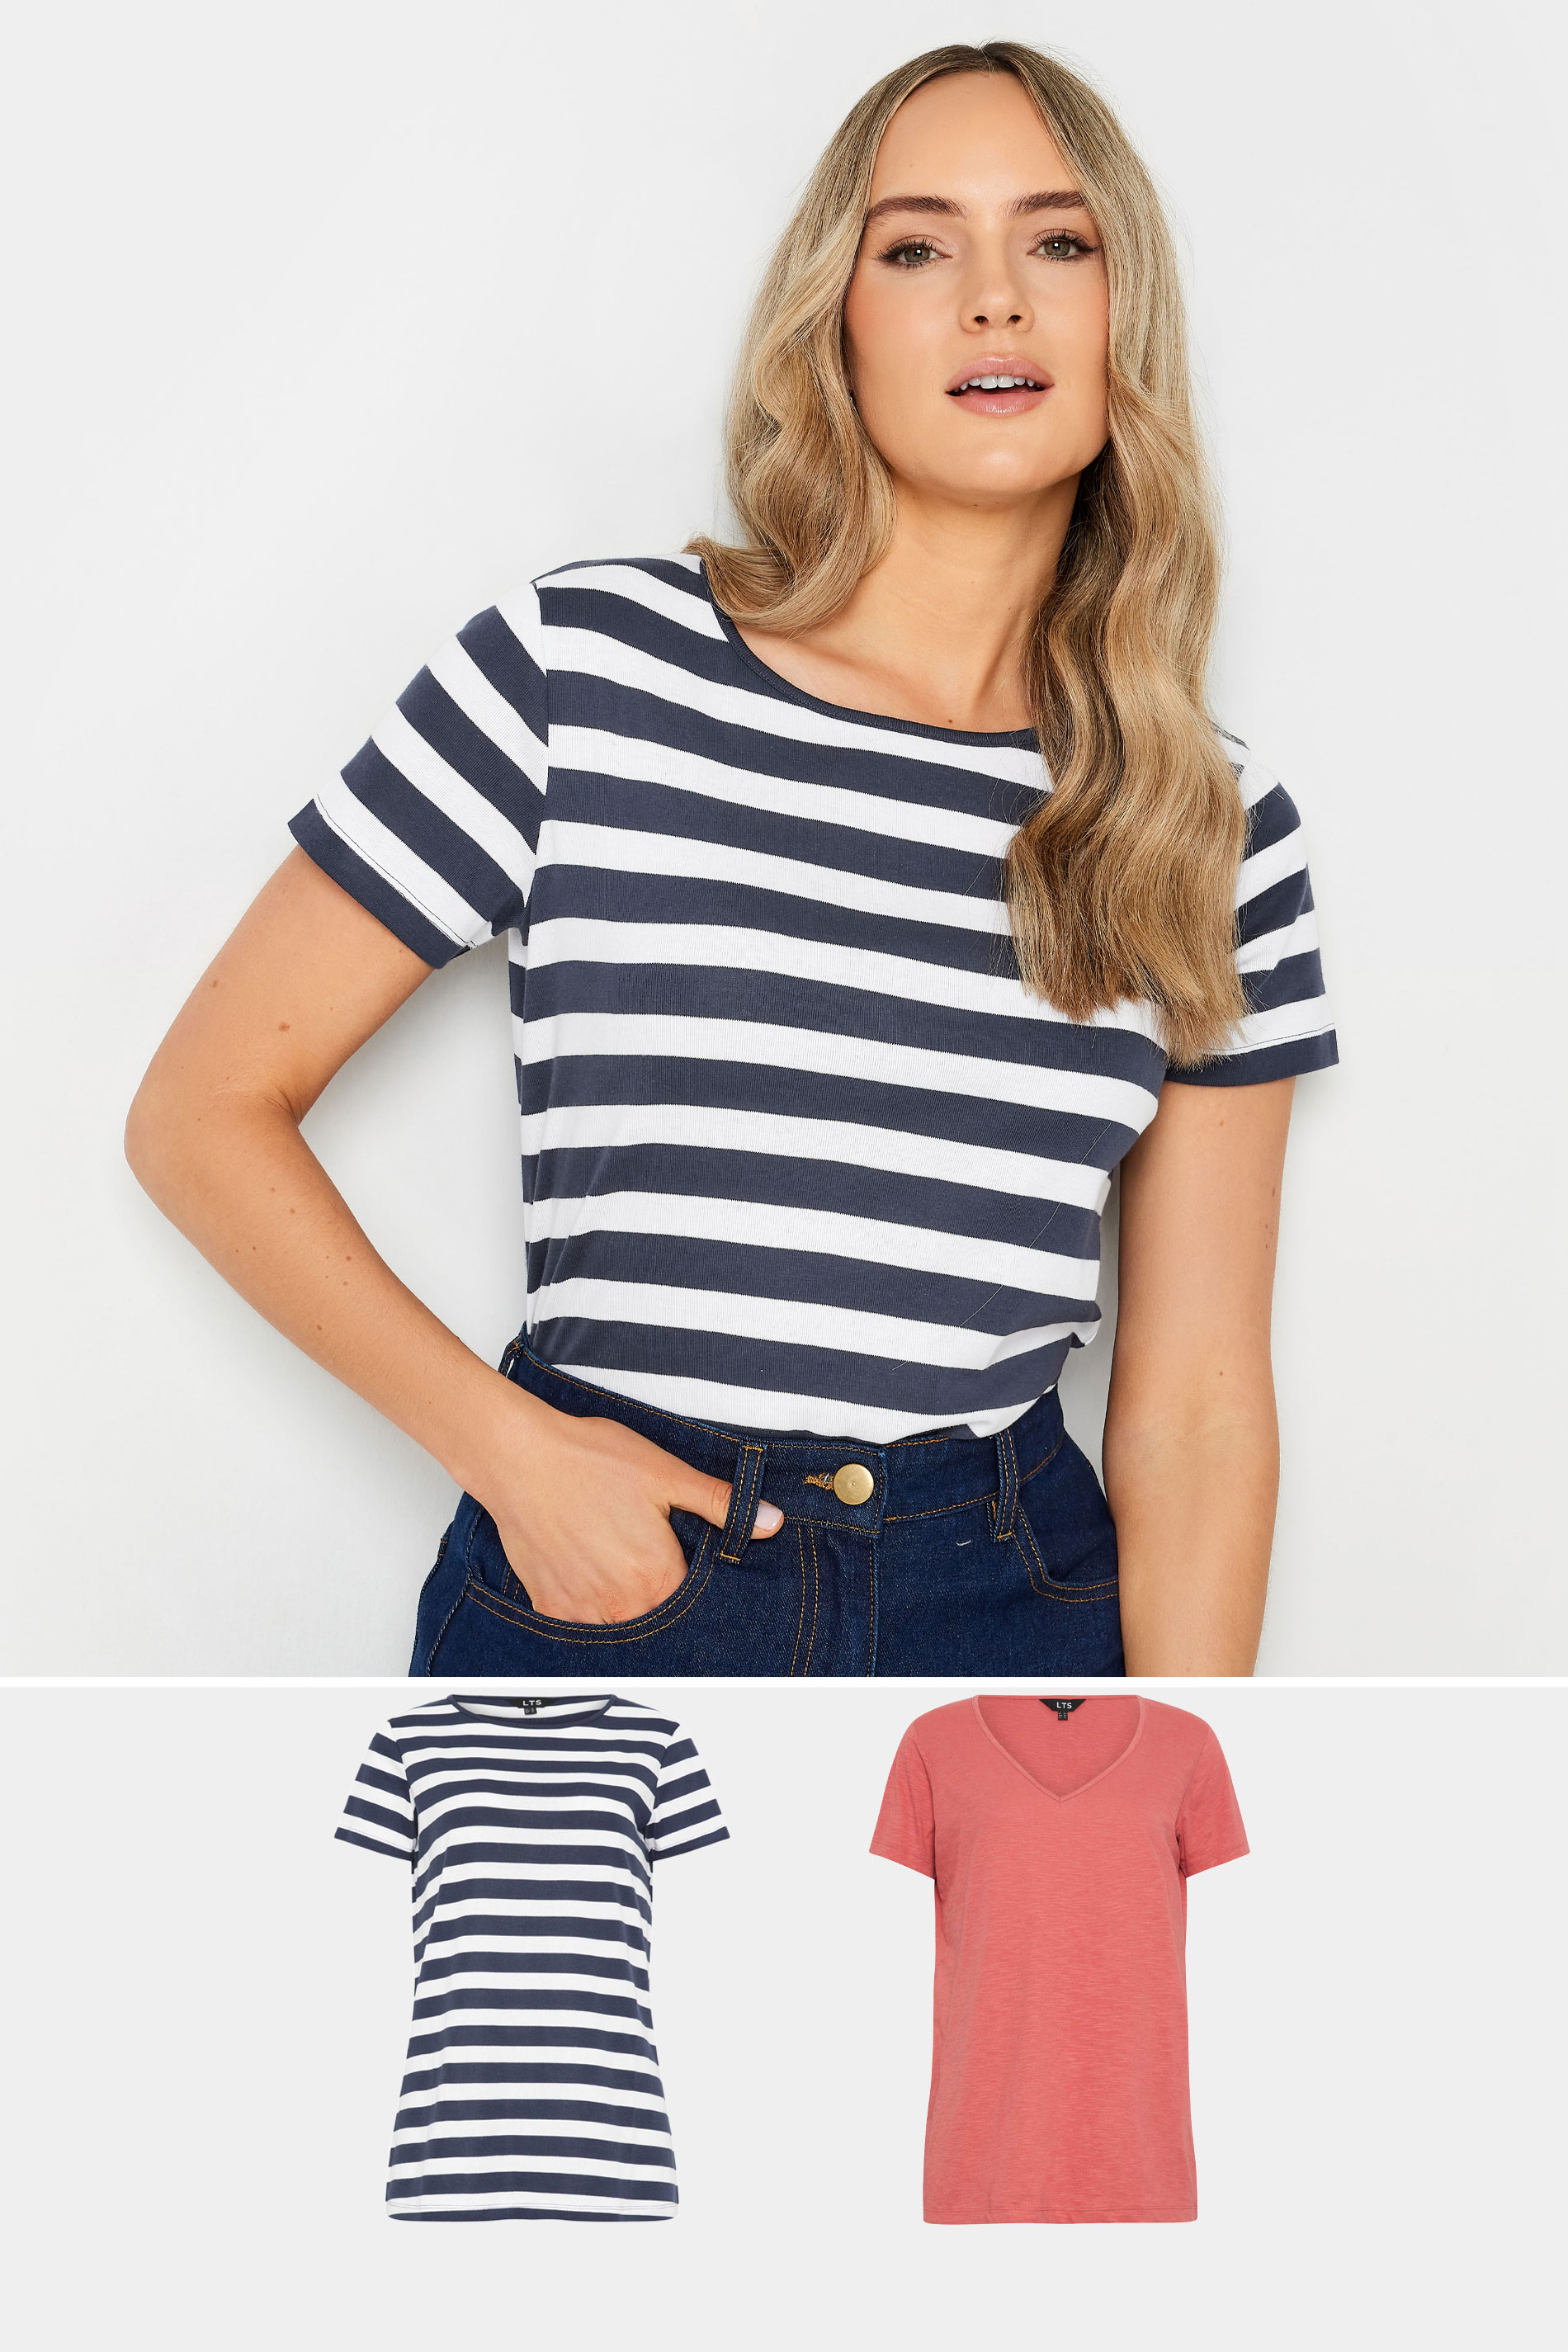 LTS Tall Womens 2 PACK Navy Blue & Coral Pink Stripe Short Sleeve T-Shirts | Long Tall Sally 1